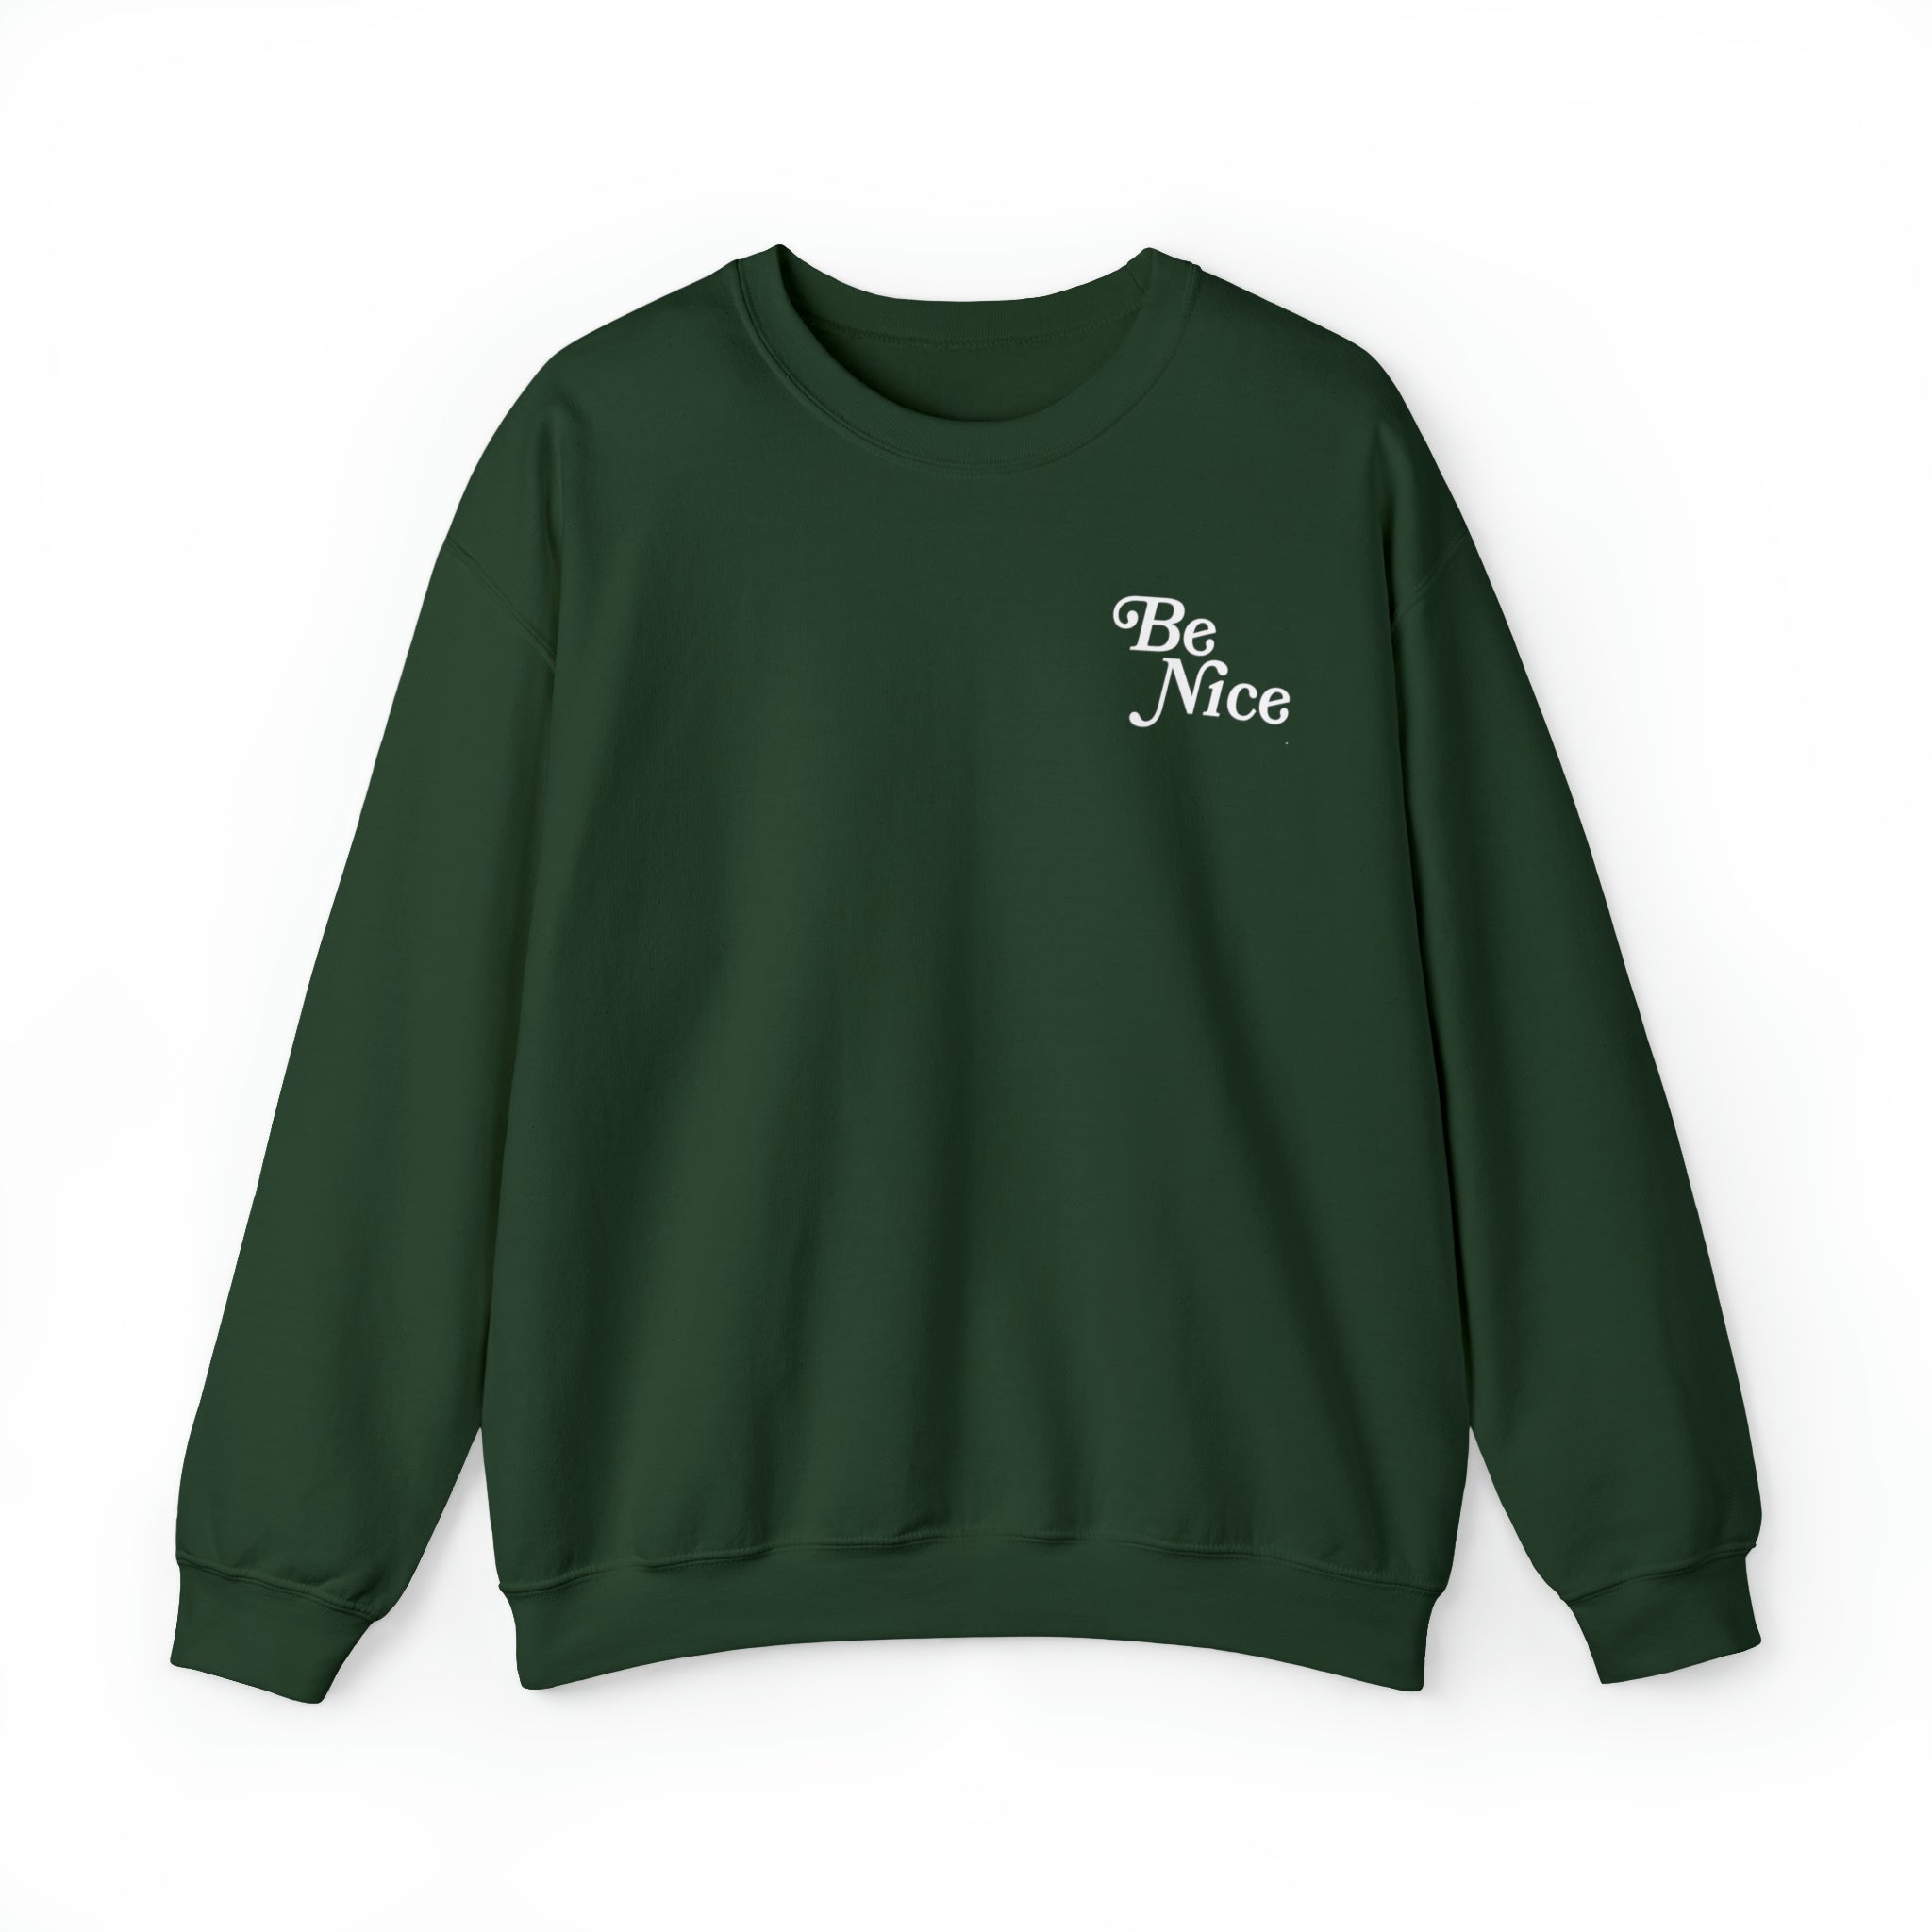 Be Nice or Kick Rocks slogan on dark-colored crewneck sweatshirt"